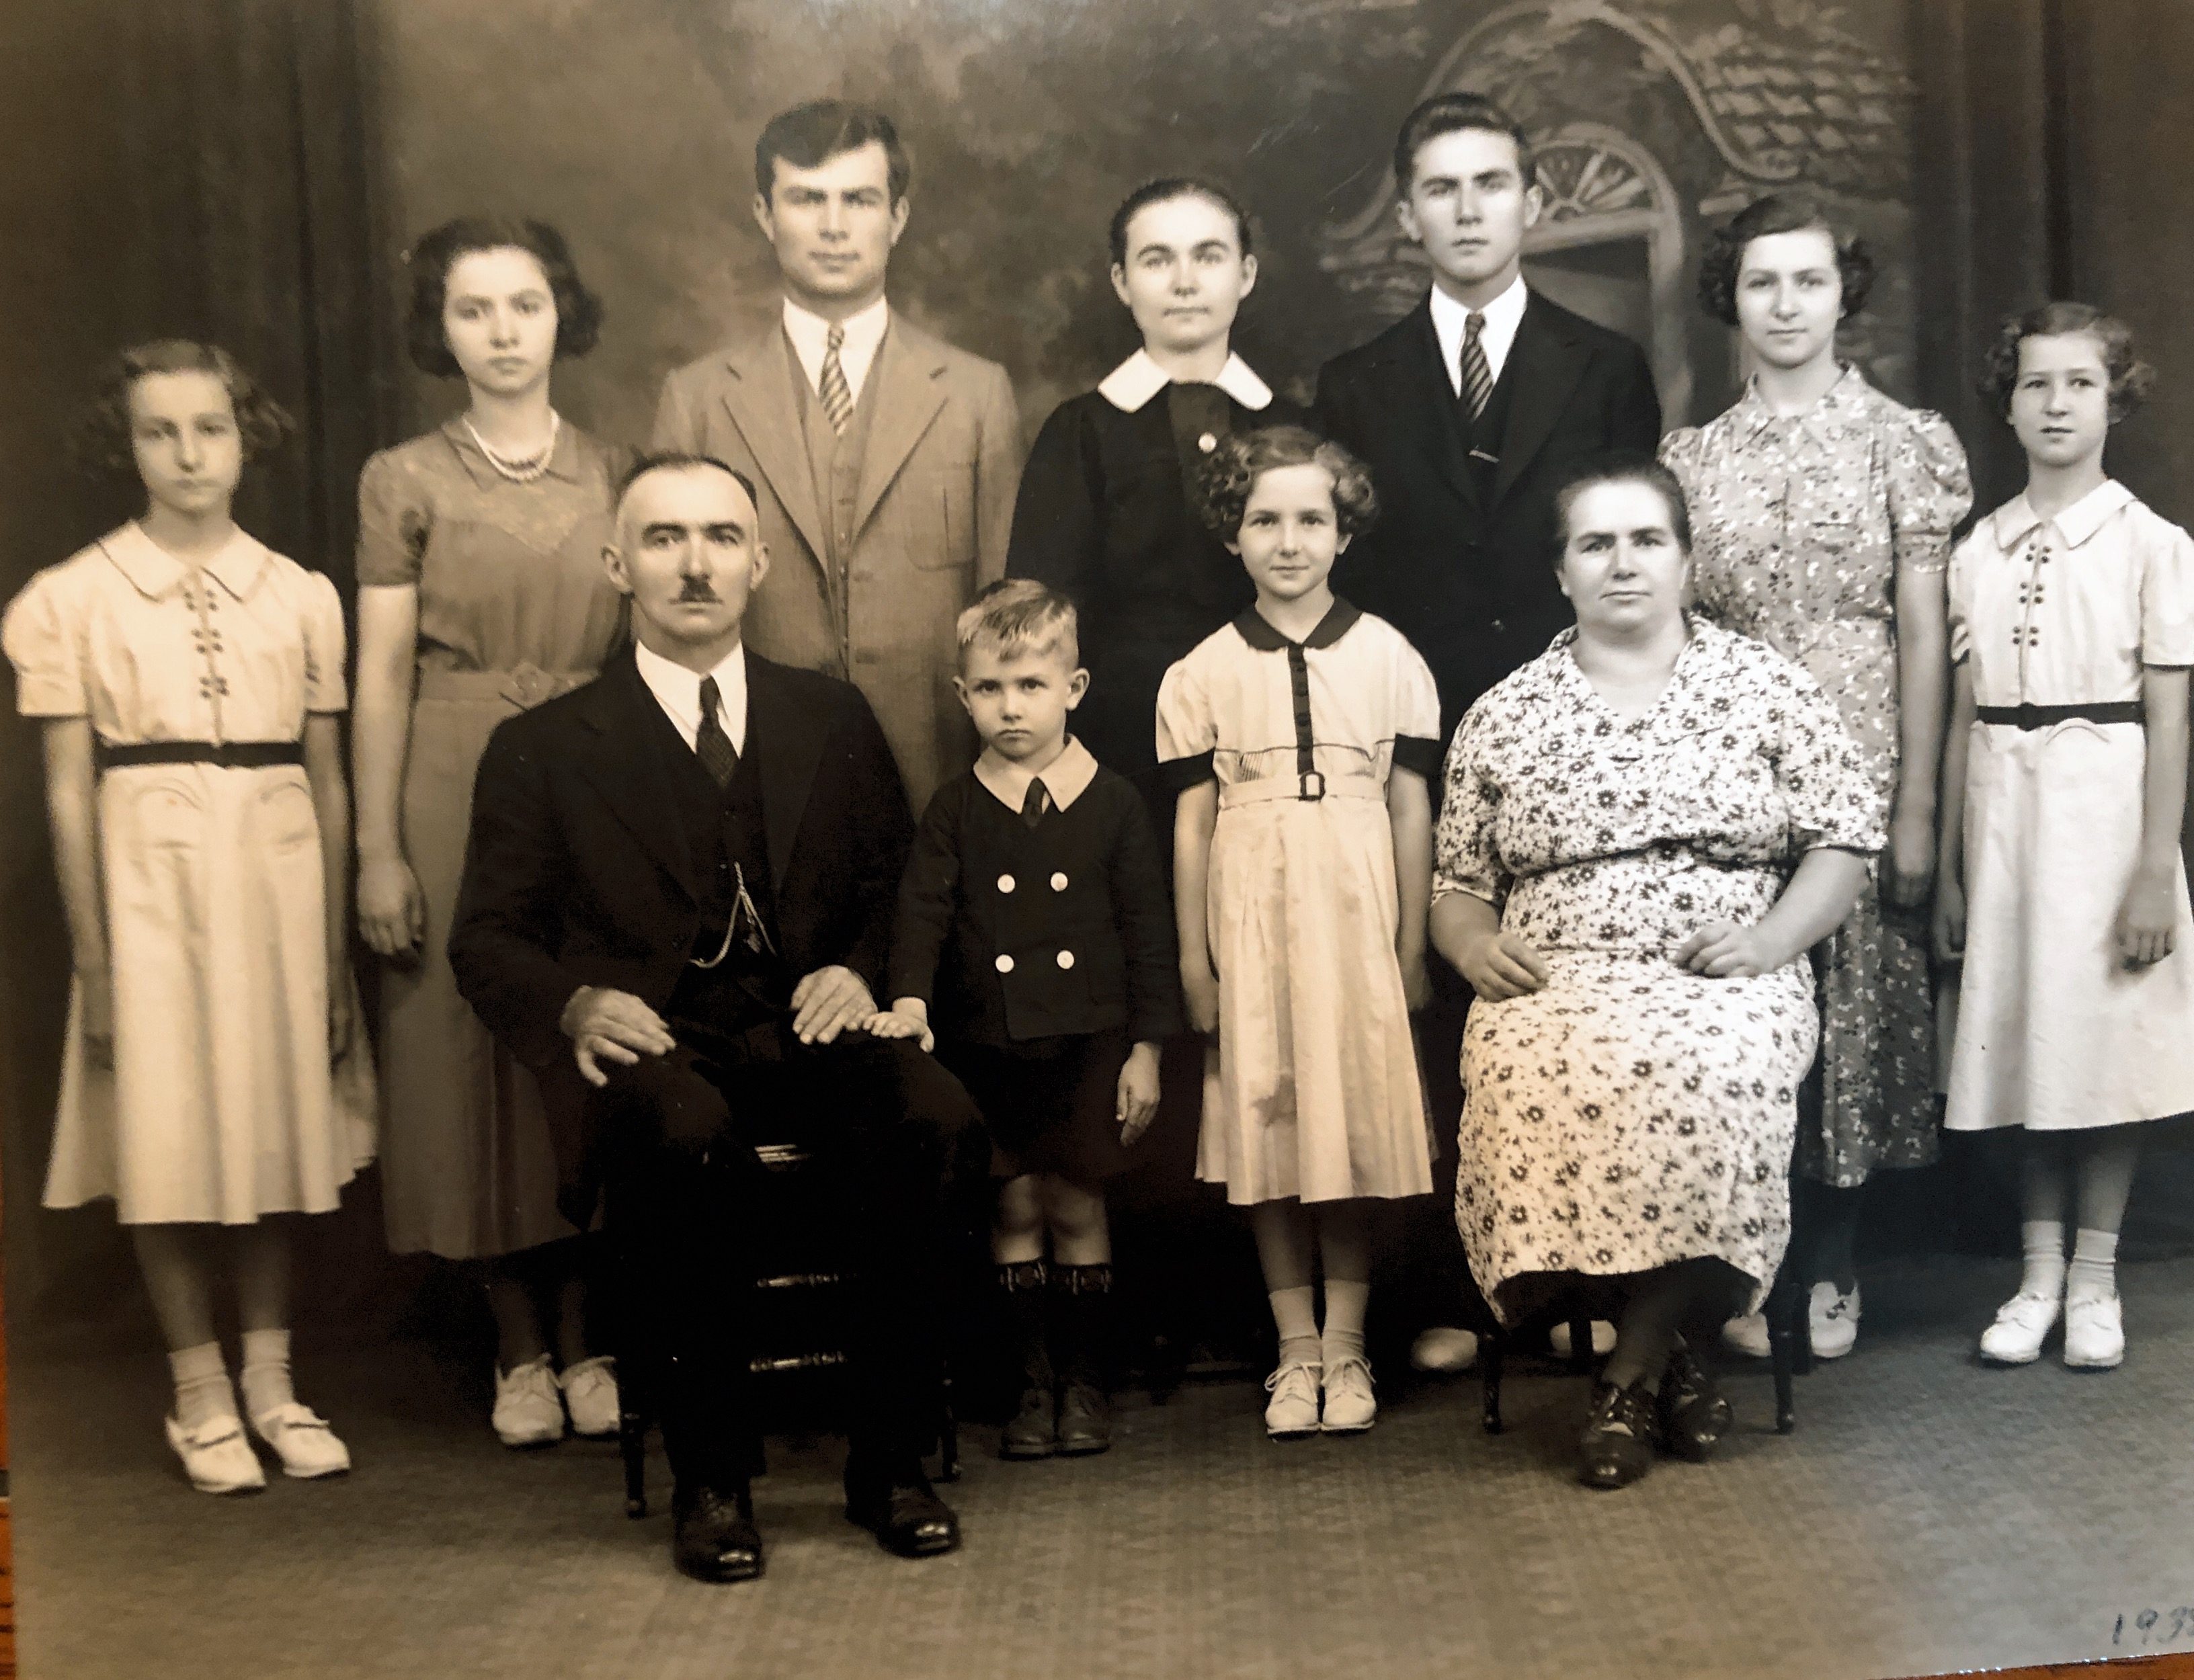 Walakovits family picture 1938 … USA